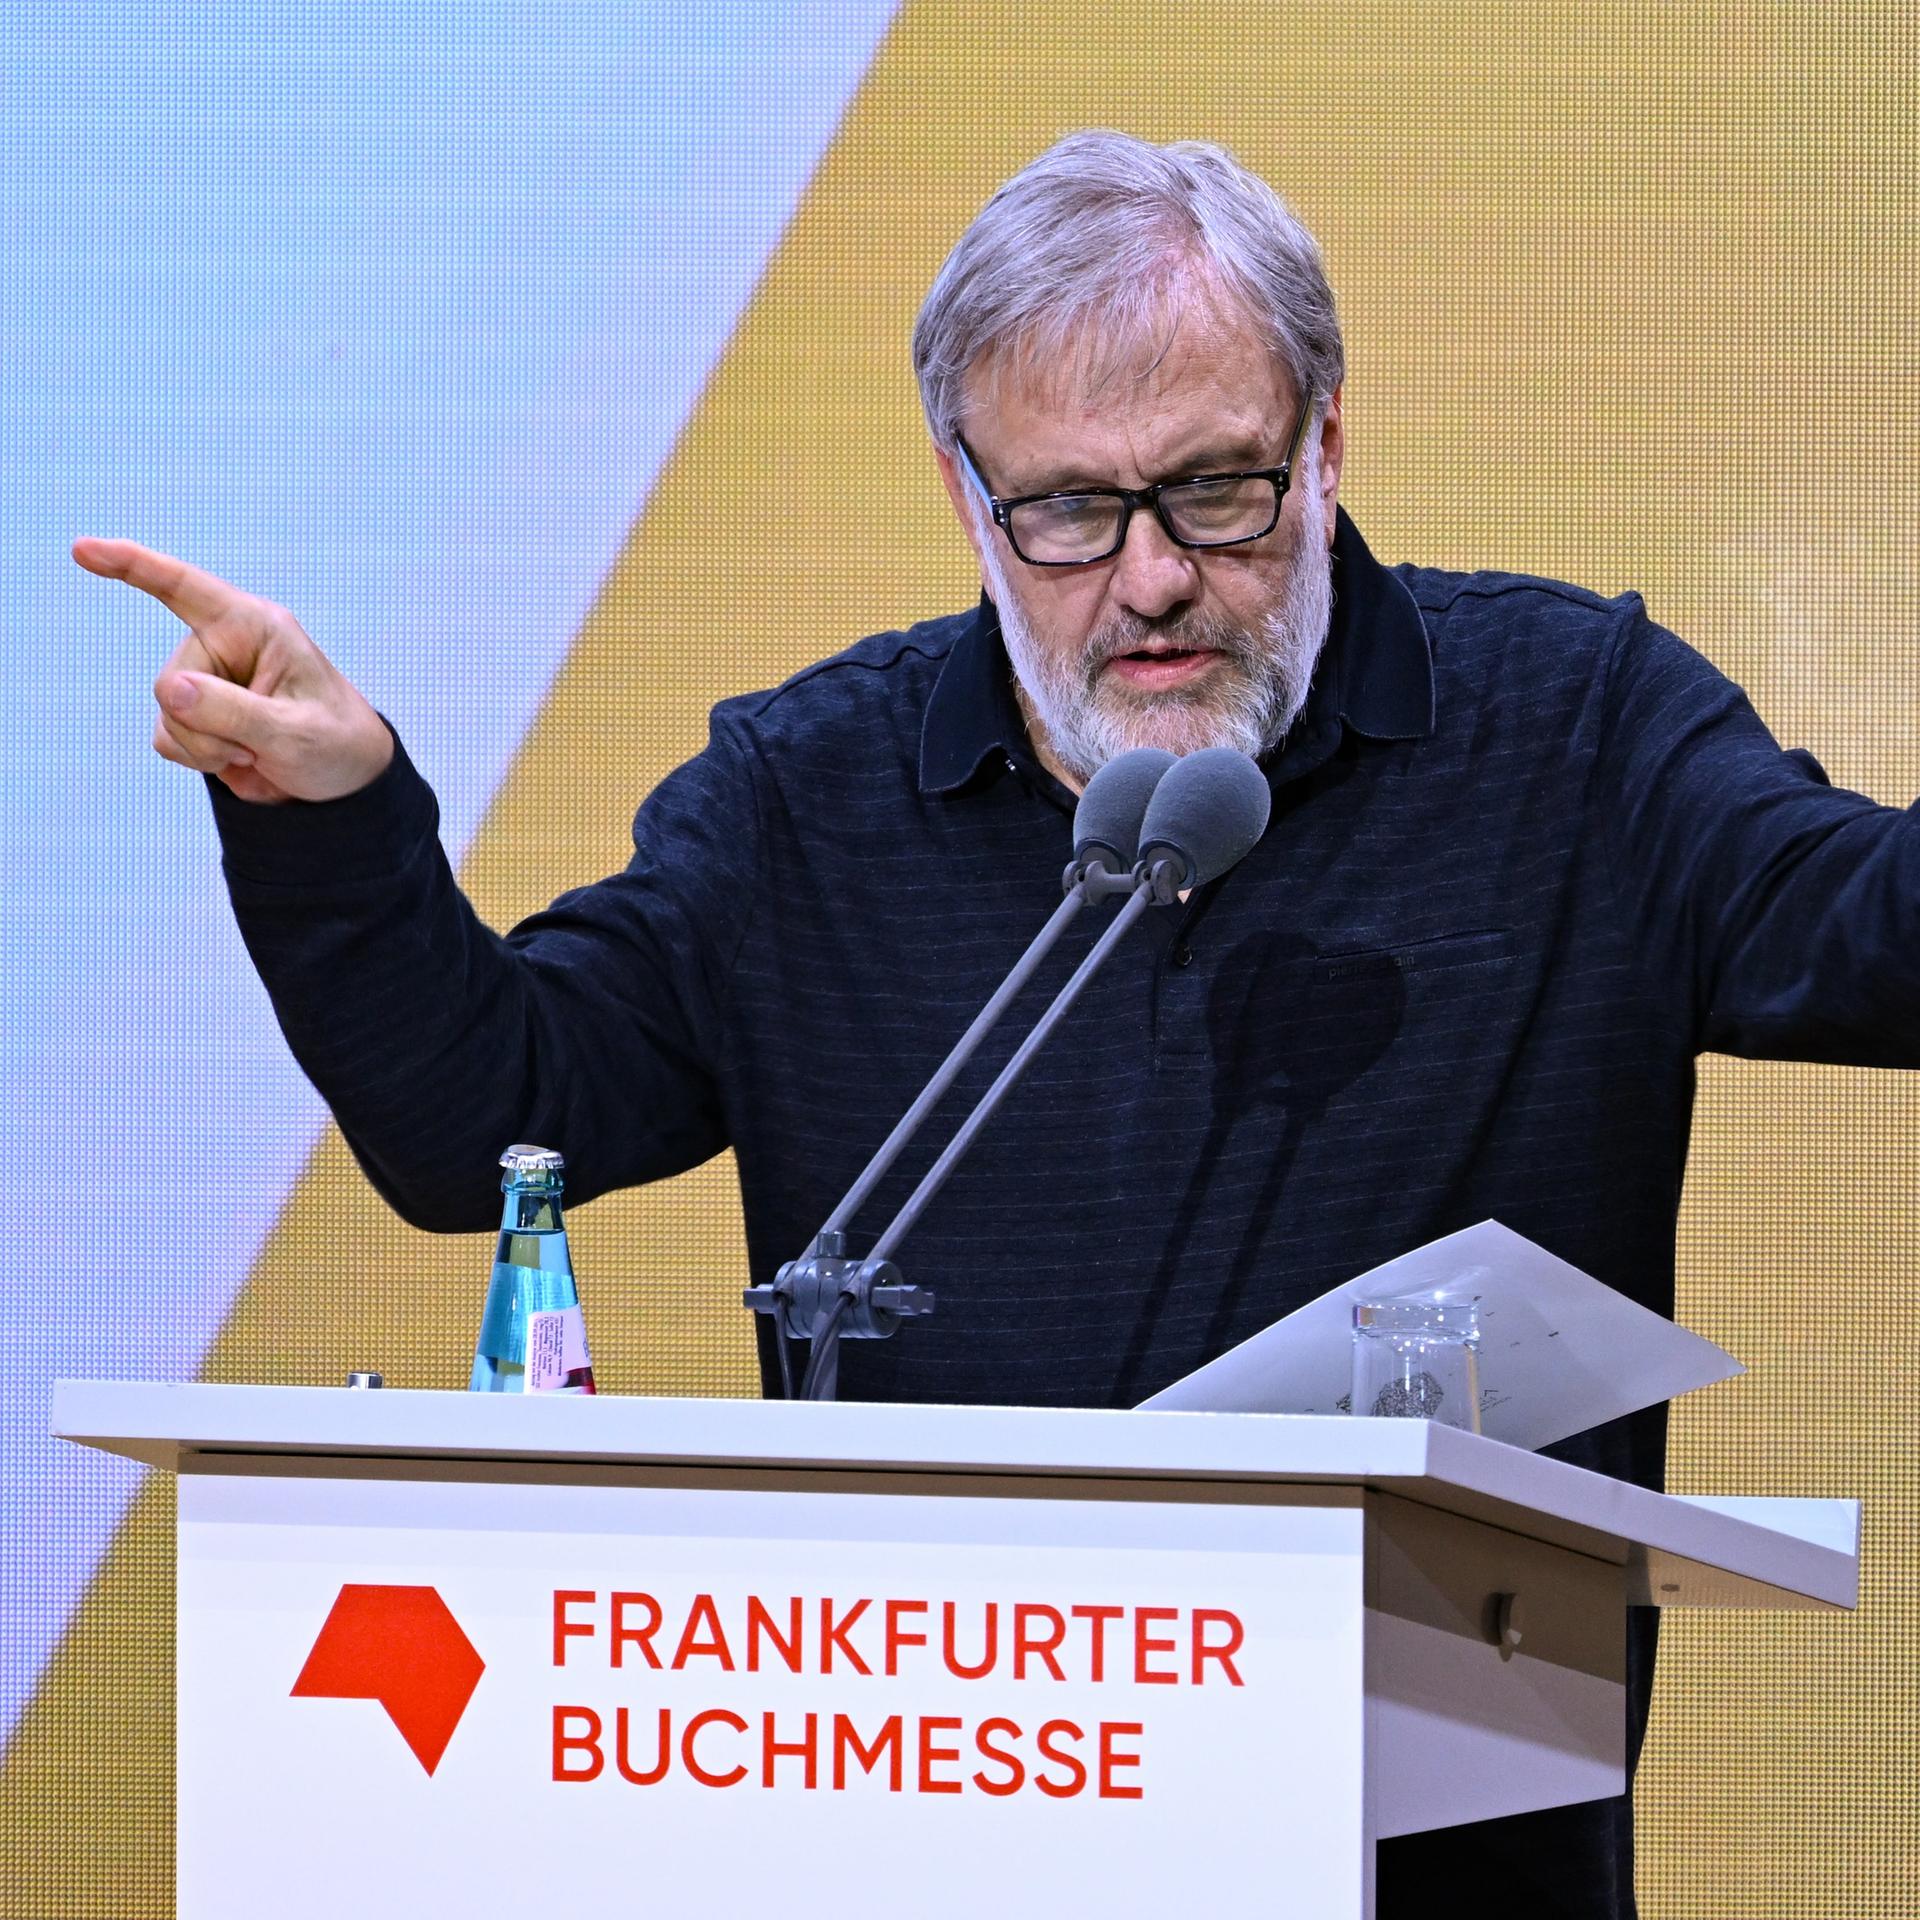 Frankfurter Buchmesse – Nahost-Eklat um Philosoph Žižek